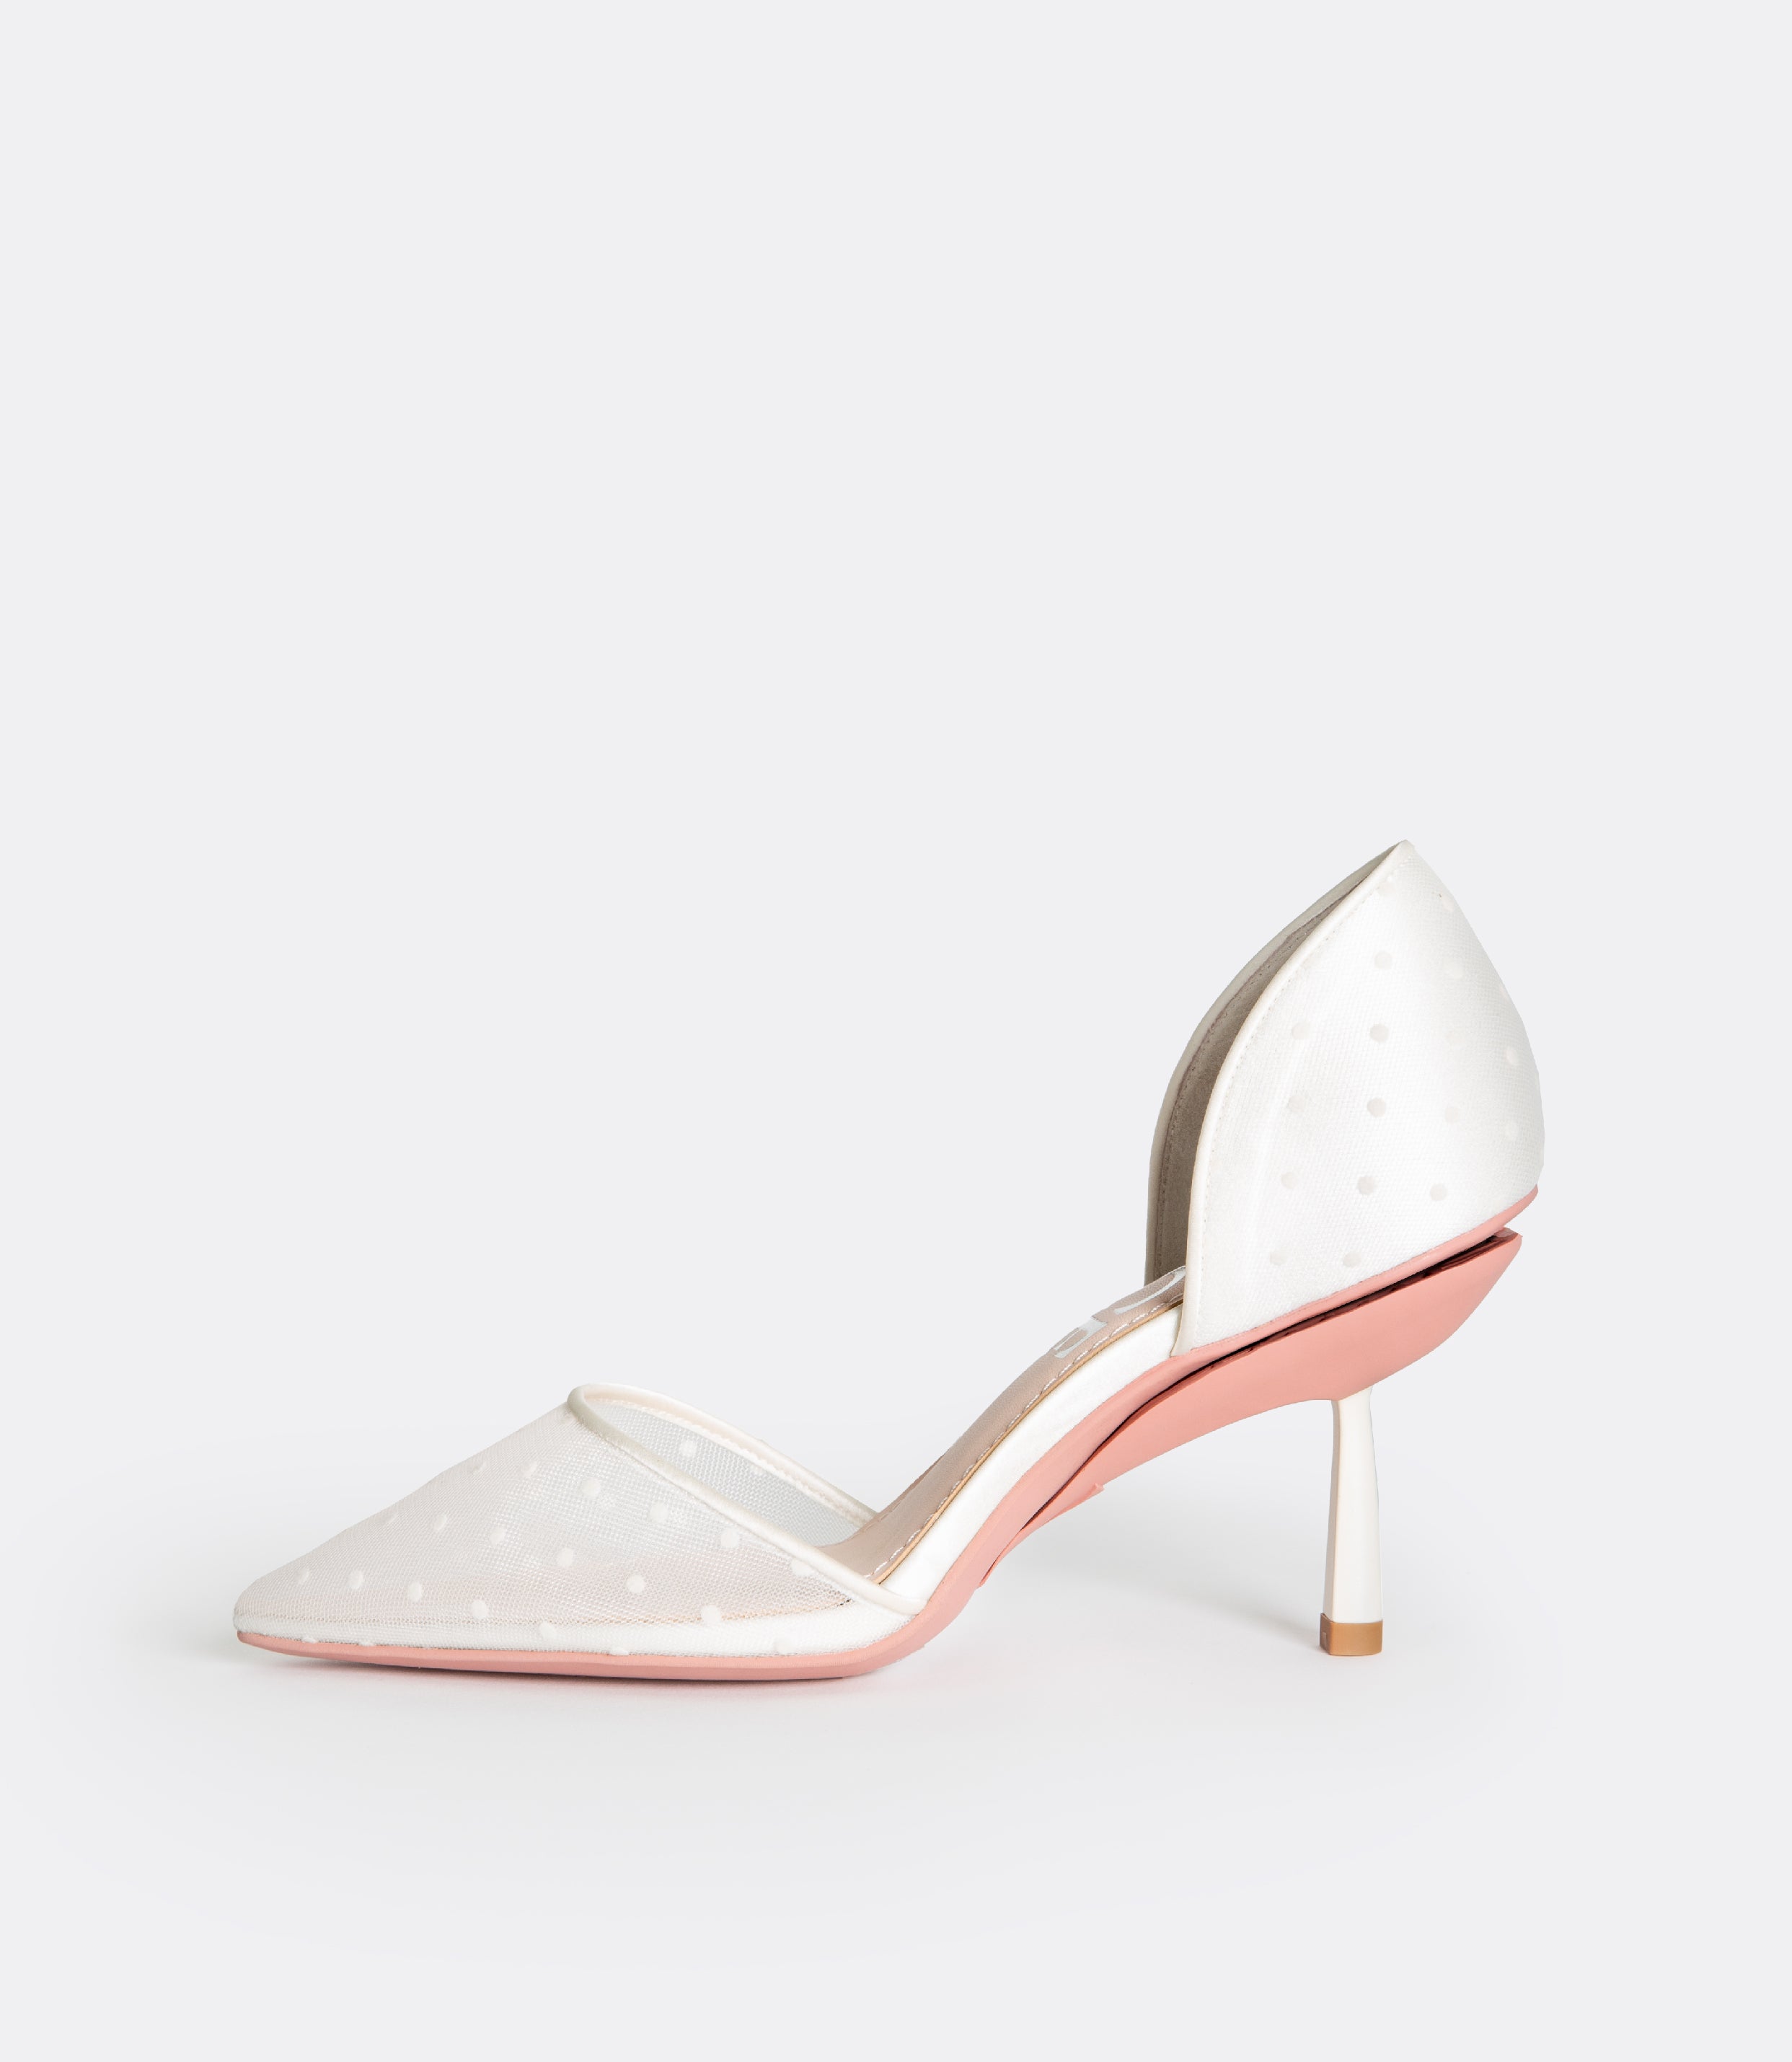 Side view of the white polka dot mesh heel